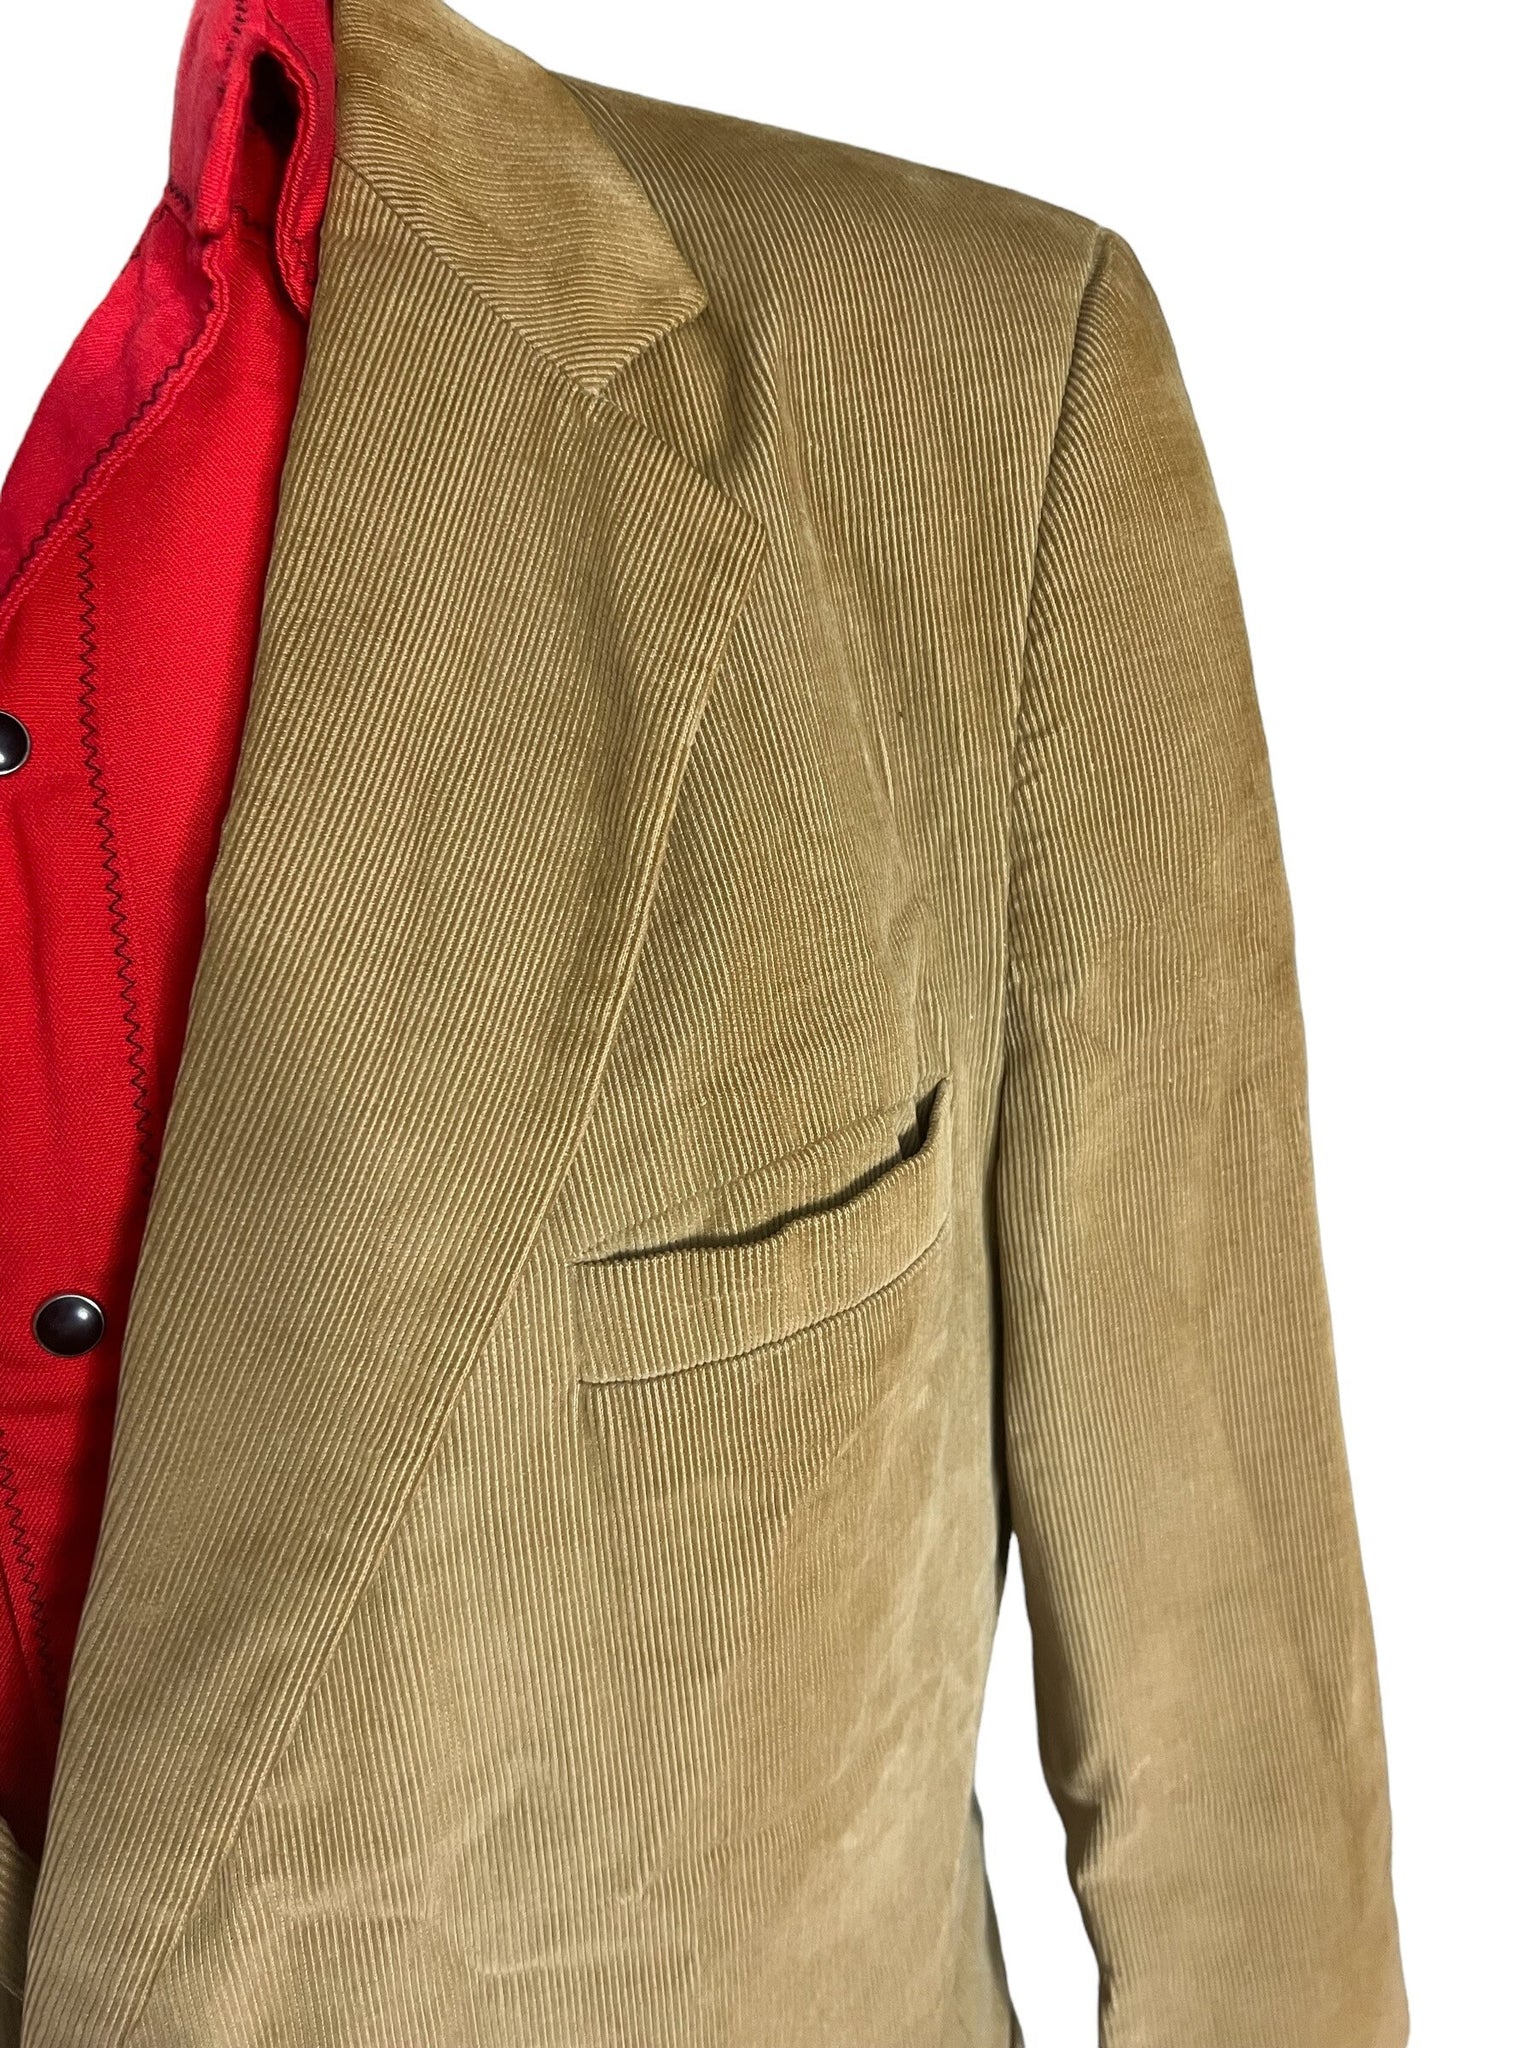 Vintage brown corduroy suit jacket 44 Mark Hall